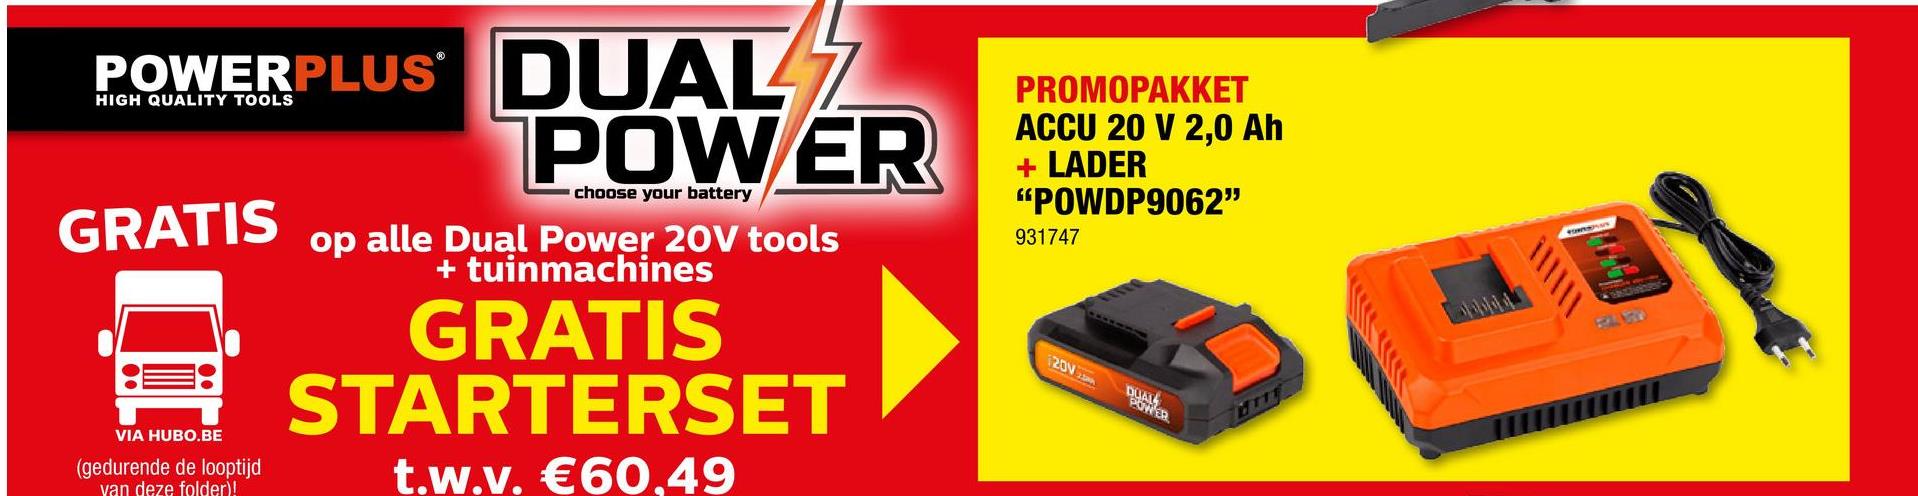 POWERPLUS DUAL 2
POWER
HIGH QUALITY TOOLS
choose your battery
GRATIS
VIA HUBO.BE
(gedurende de looptijd
van deze folder)!
op alle Dual Power 20V tools
+ tuinmachines
GRATIS
STARTERSET
t.w.v. €60.49
PROMOPAKKET
ACCU 20 V 2,0 Ah
+ LADER
"POWDP9062"
931747
120V
POWER
HIT
\\\\\!
TOWNSHAS